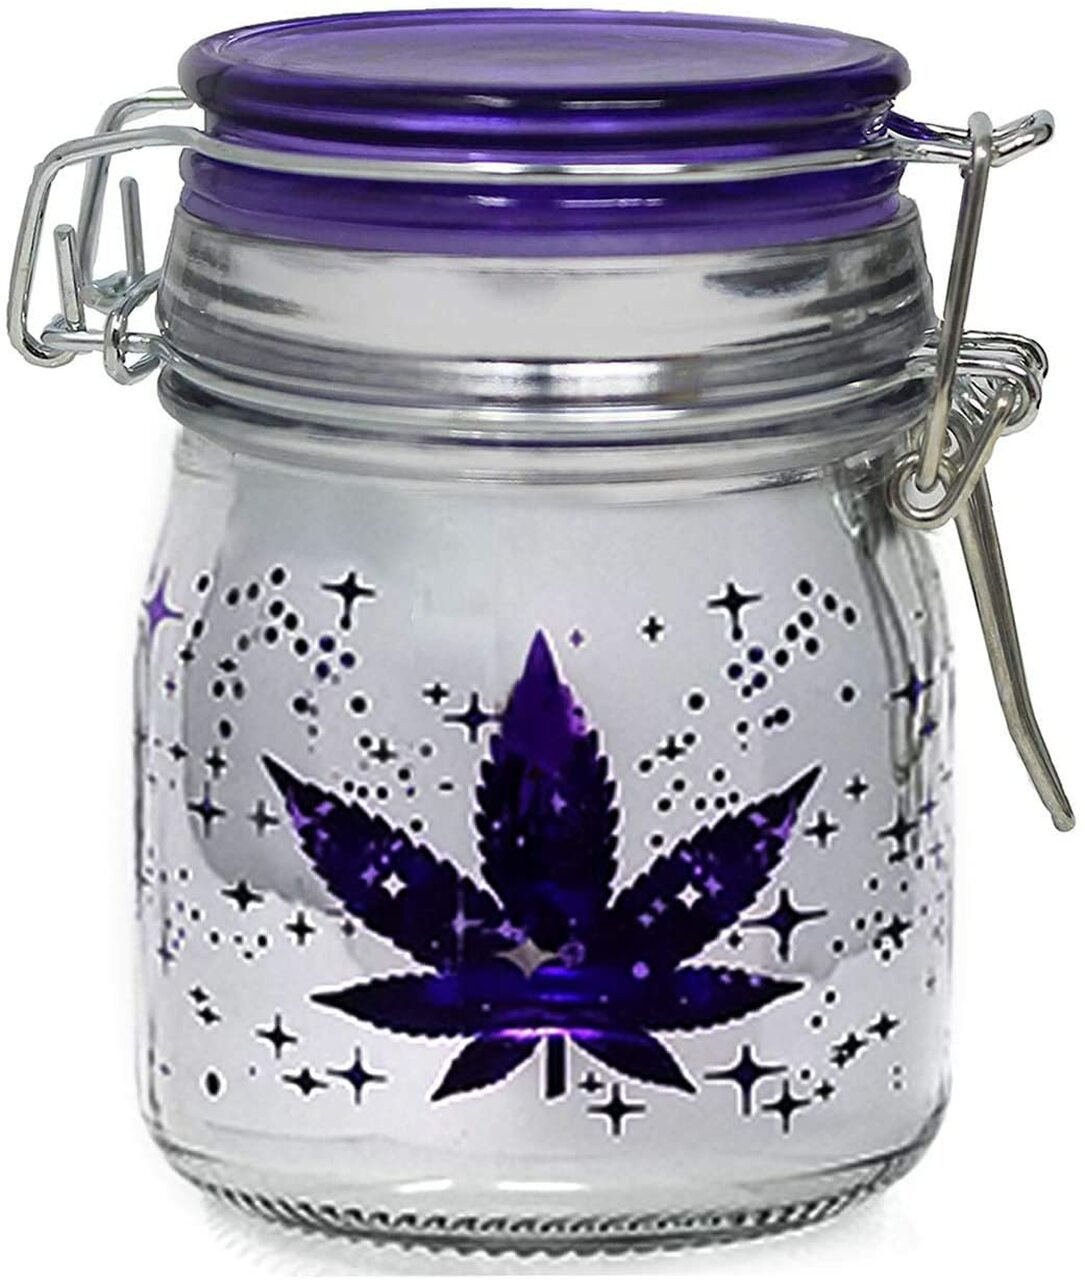 Airtight Glass Stash Jar 5 Oz - Metallic Purple Leaf Galaxy Design 